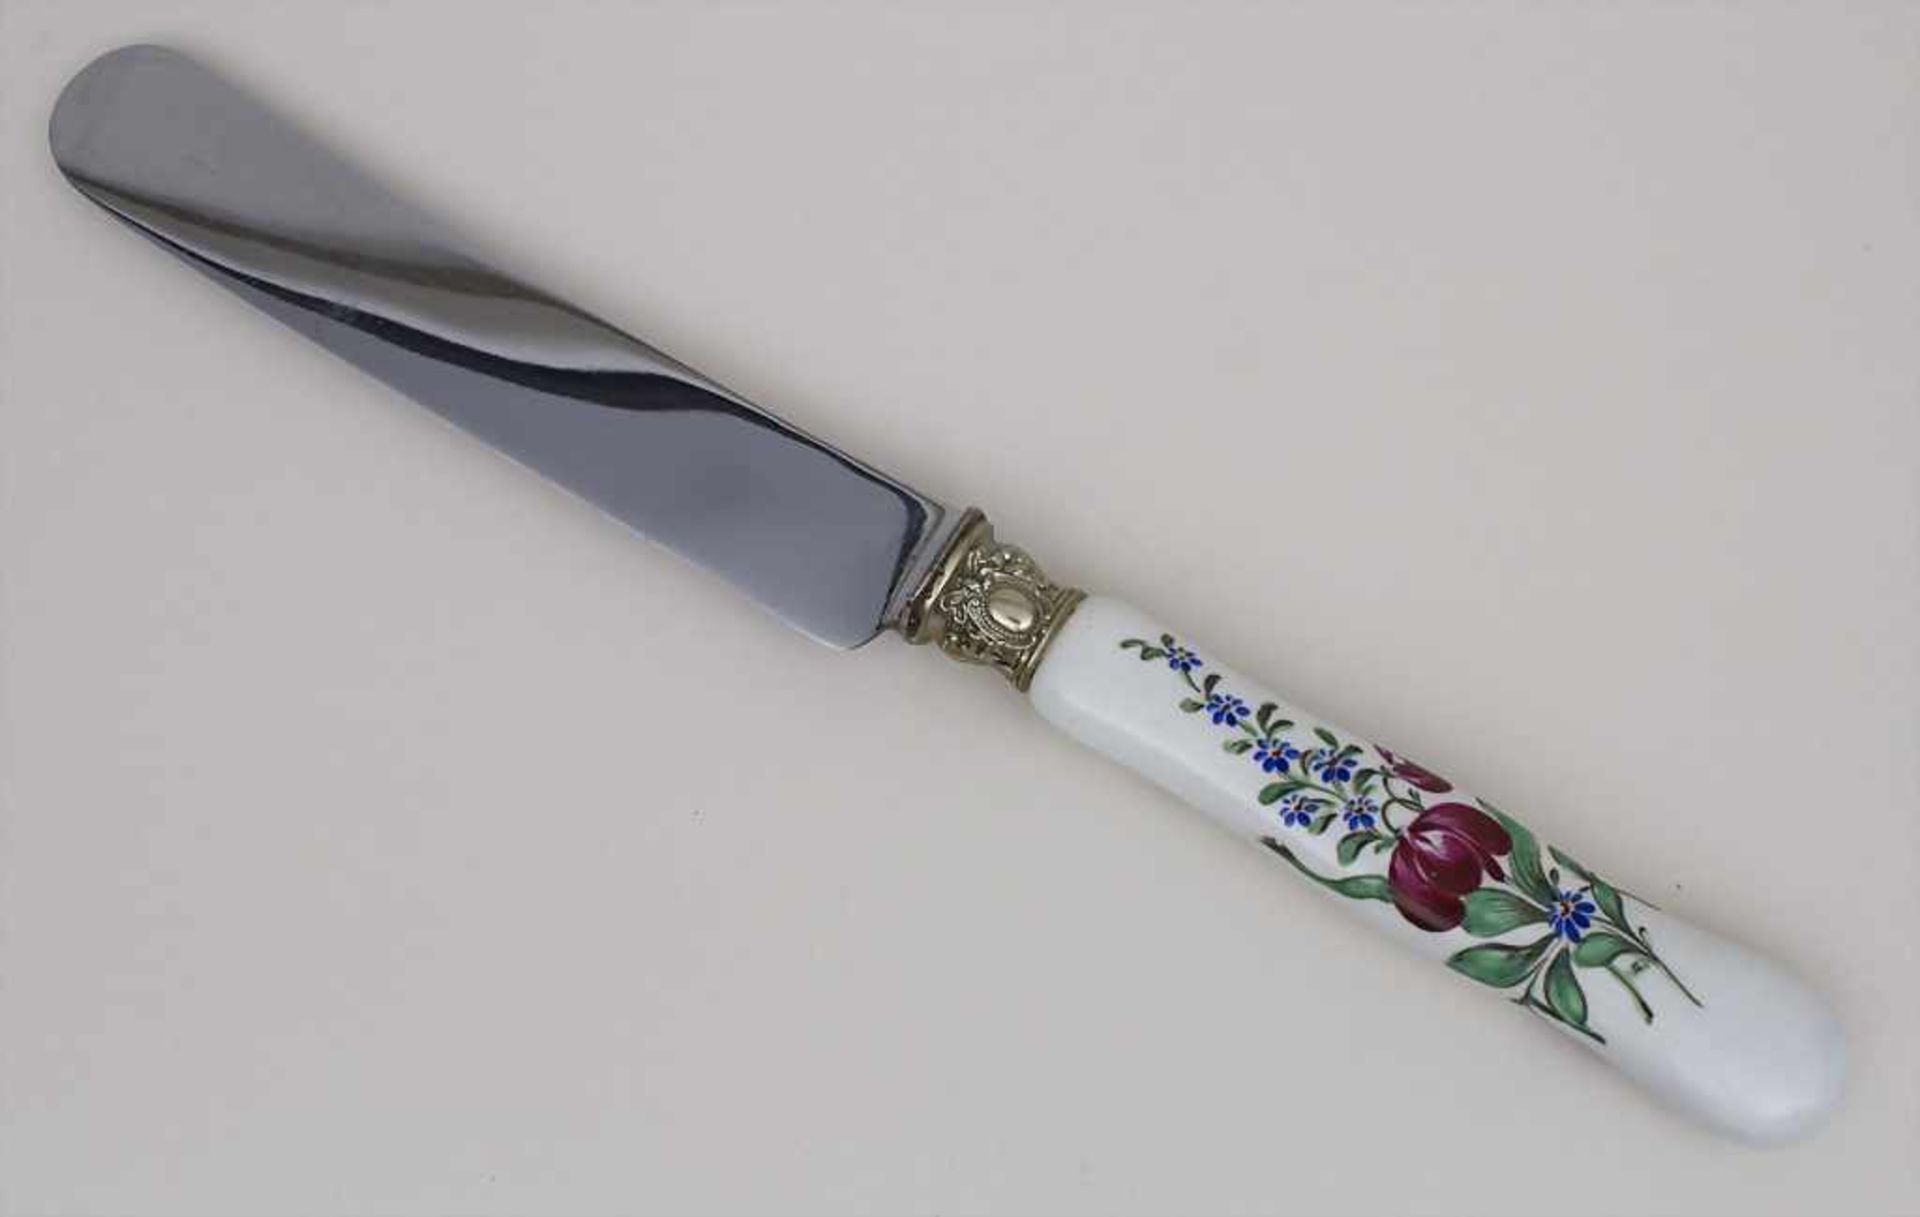 Messer mit Porzellangriff / A knife with porcelain handle, deutsch, Ende 19. JhMaterial: